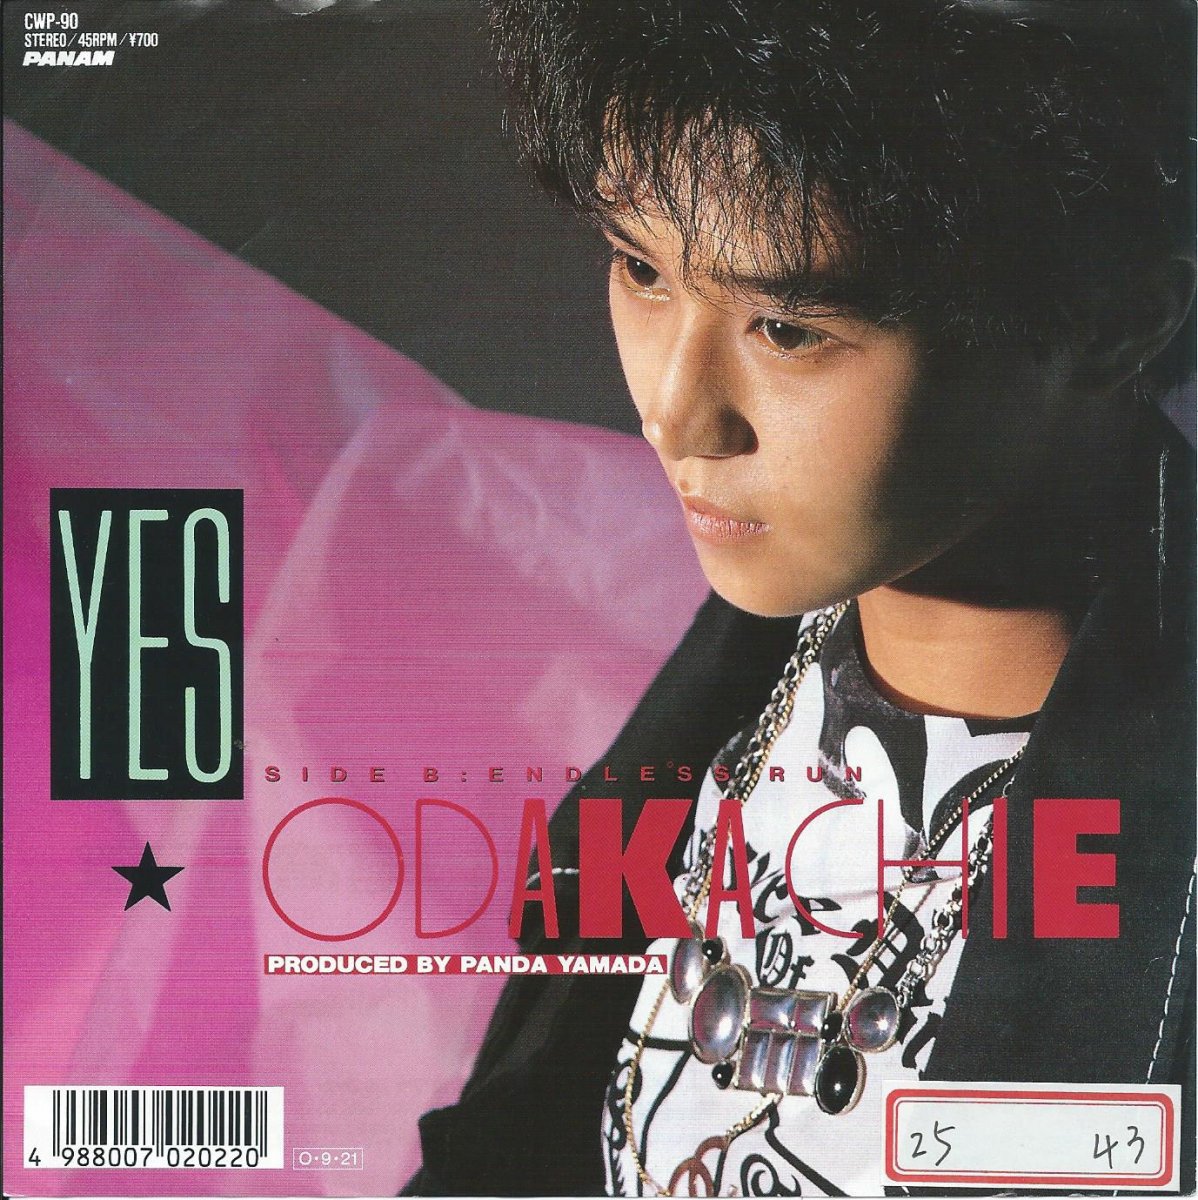 尾高千恵 CHIE ODAKA / YES / ENDLESS RUN (7) - HIP TANK RECORDS